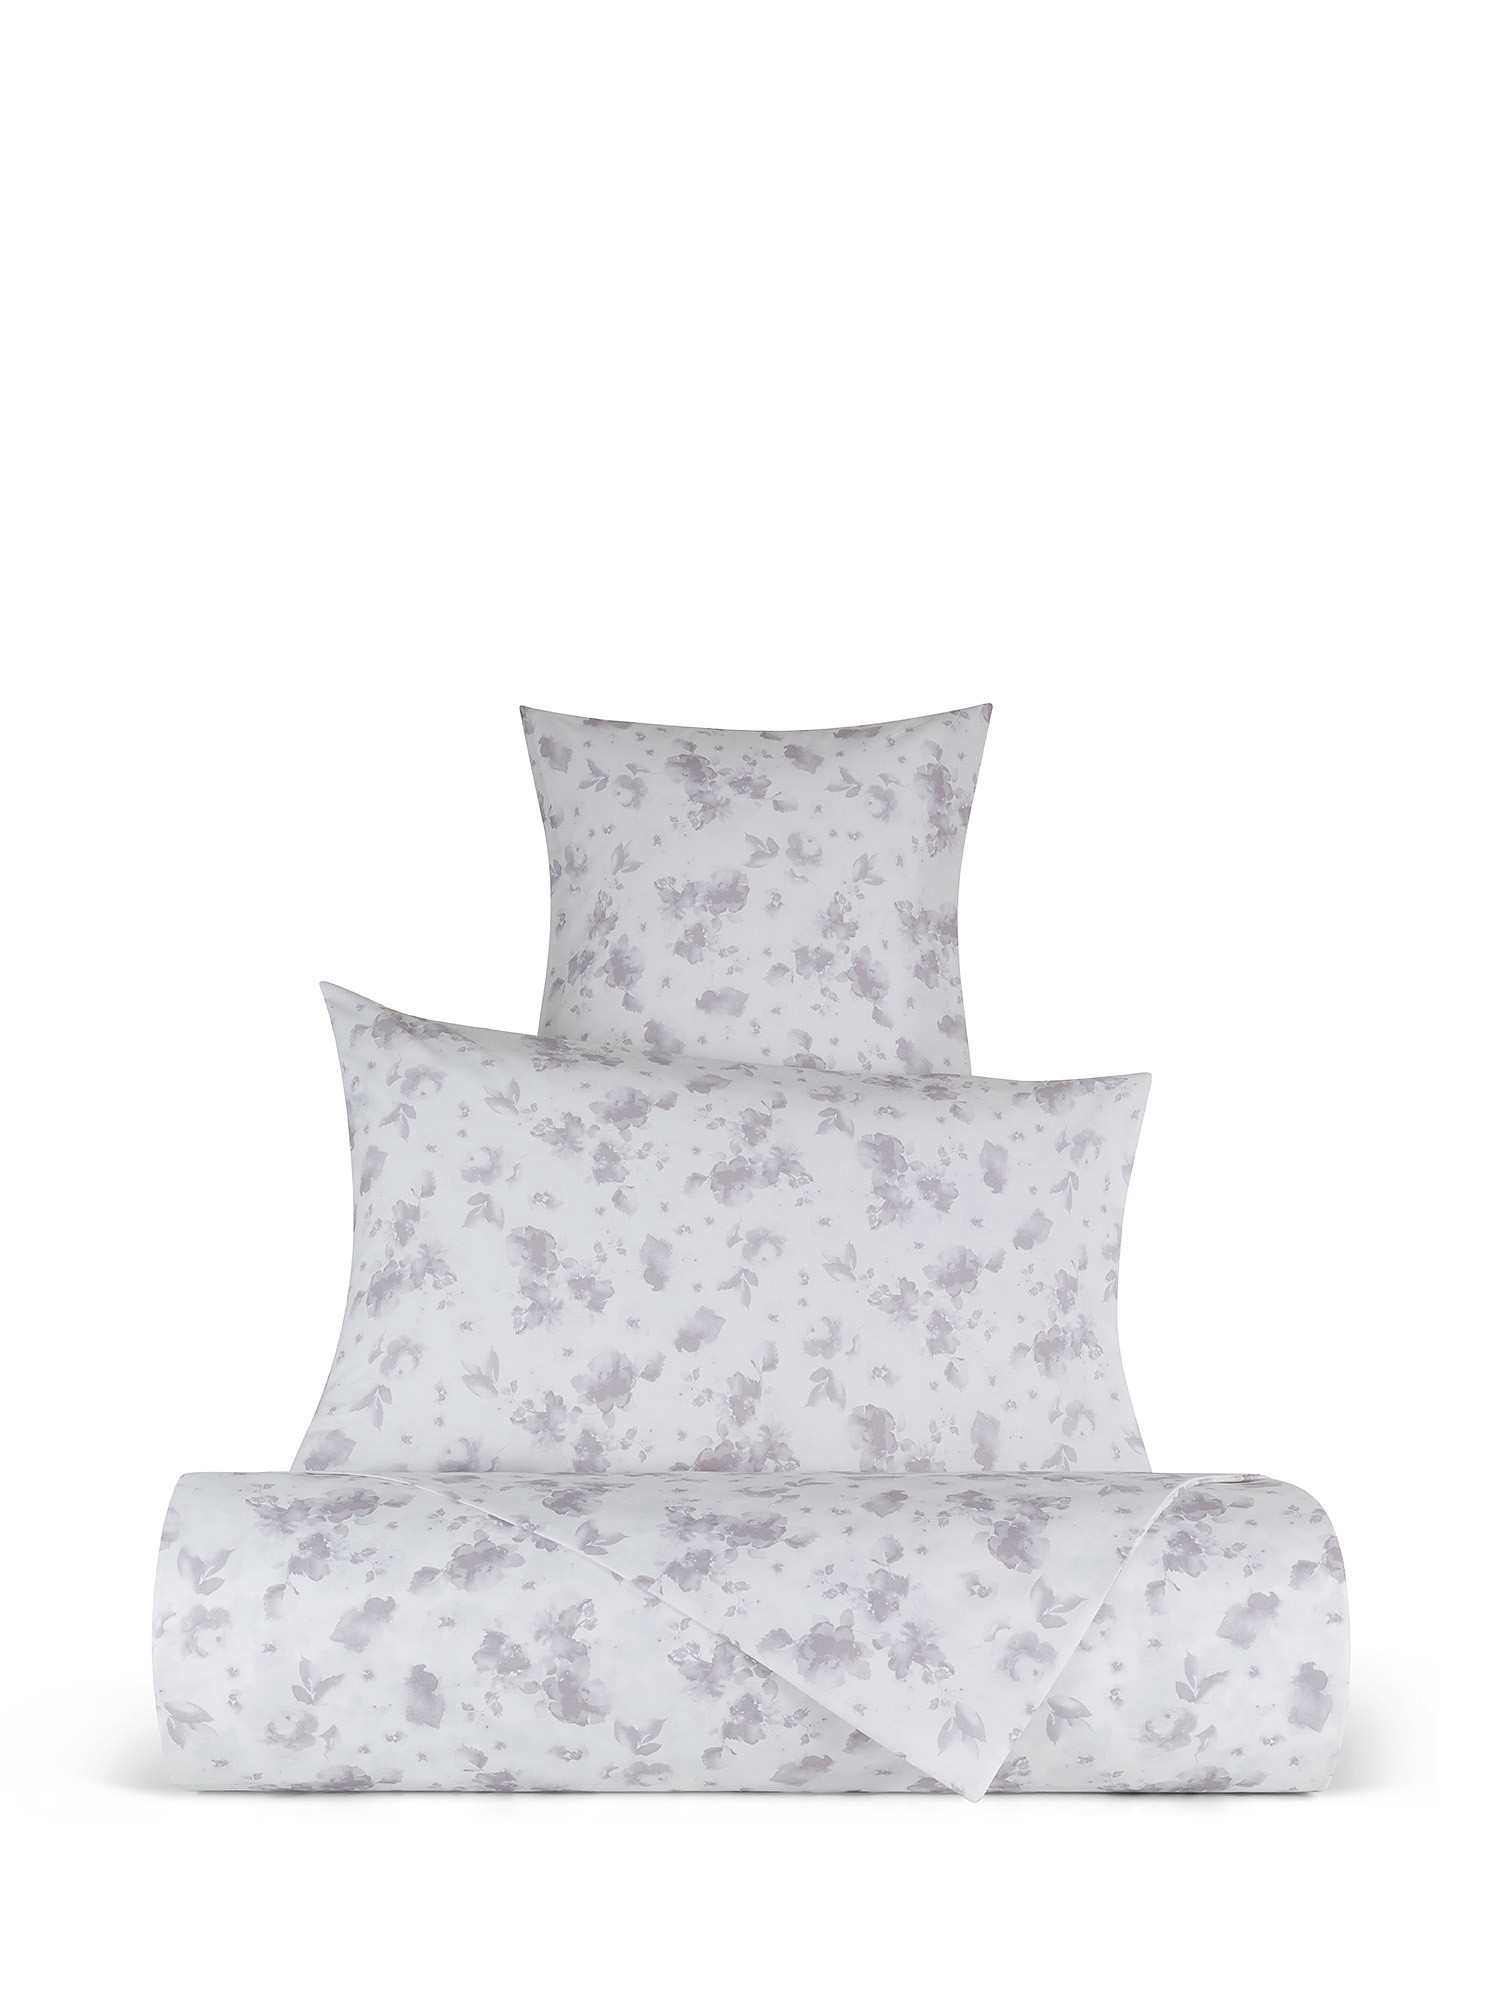 Portofino floral pattern cotton percale pillowcase, White, large image number 2